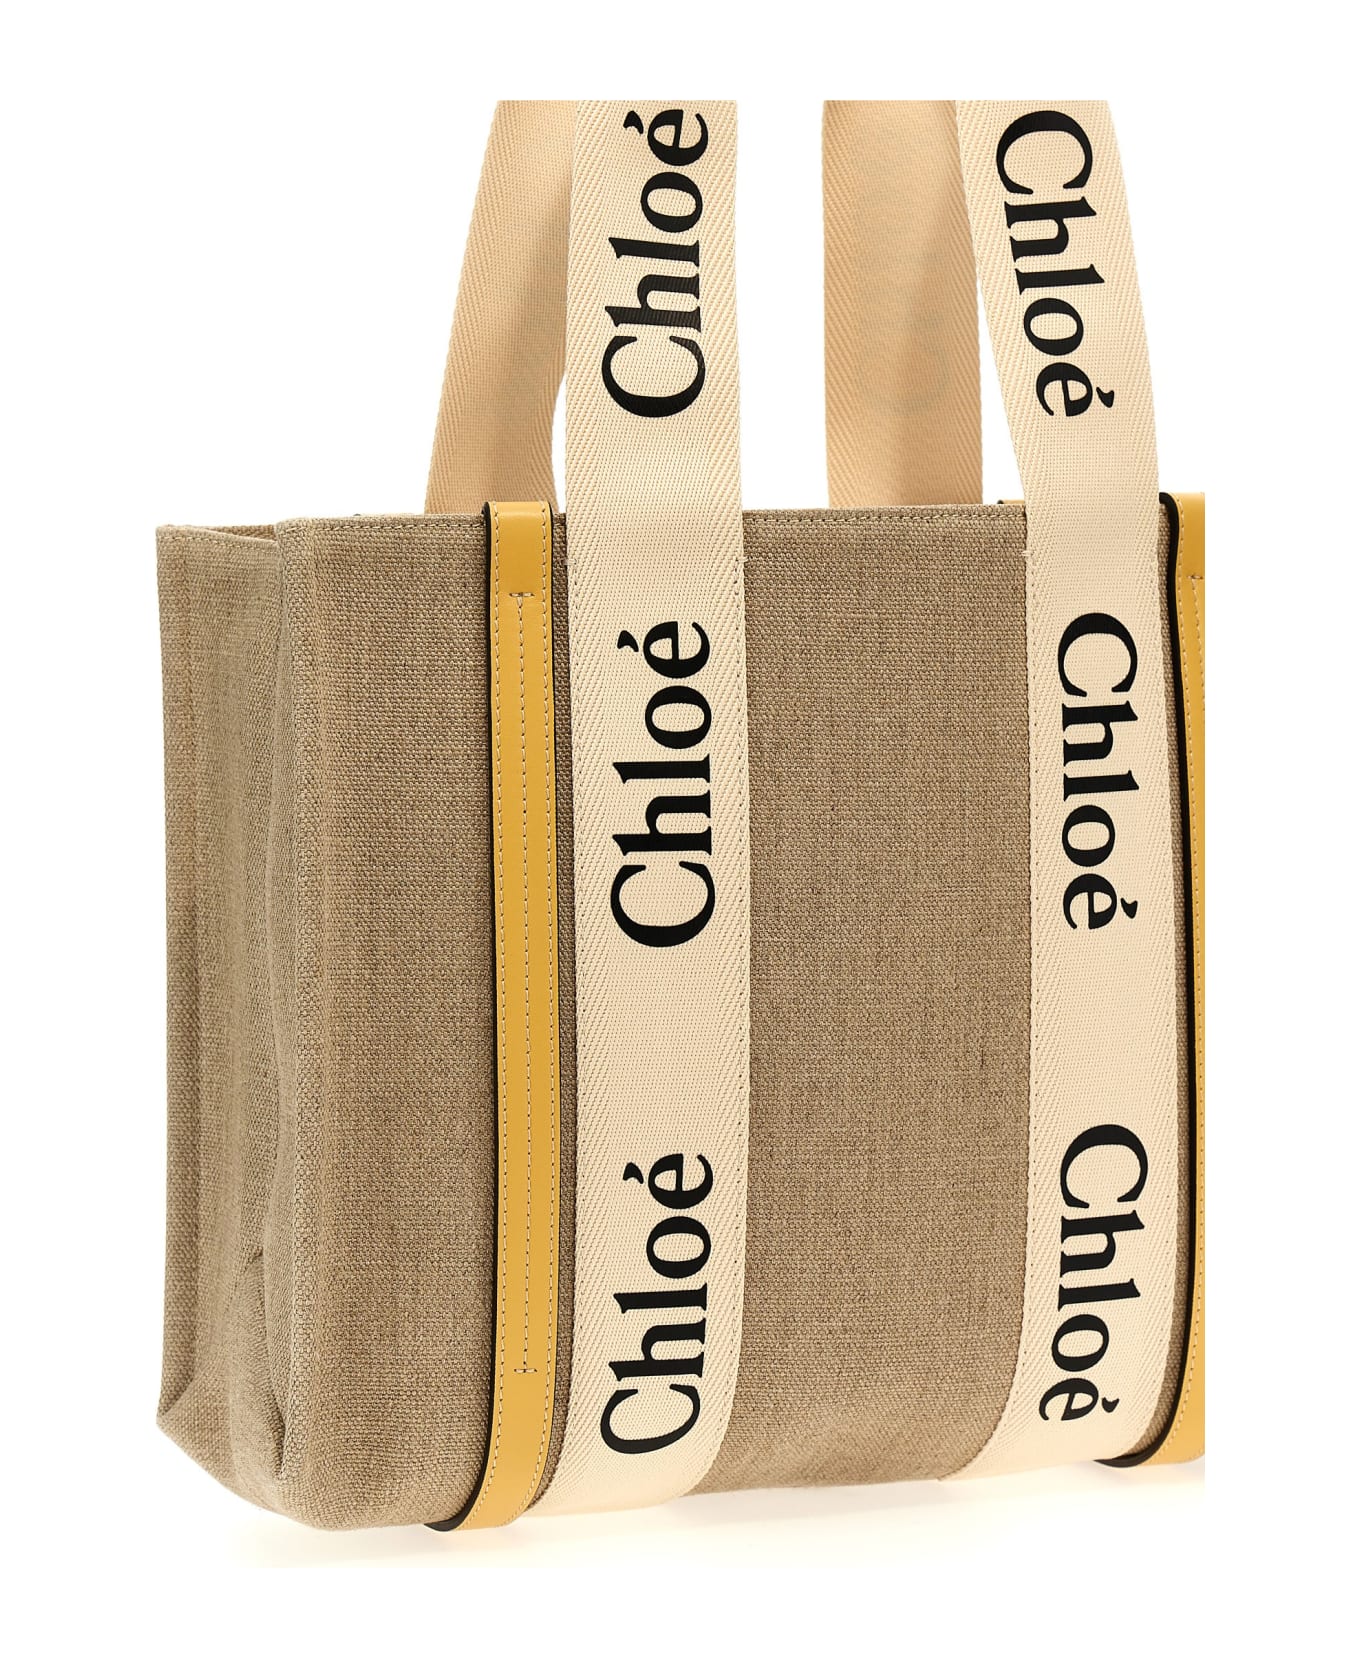 Chloé Woody Medium Tote Bag - Yellow トートバッグ